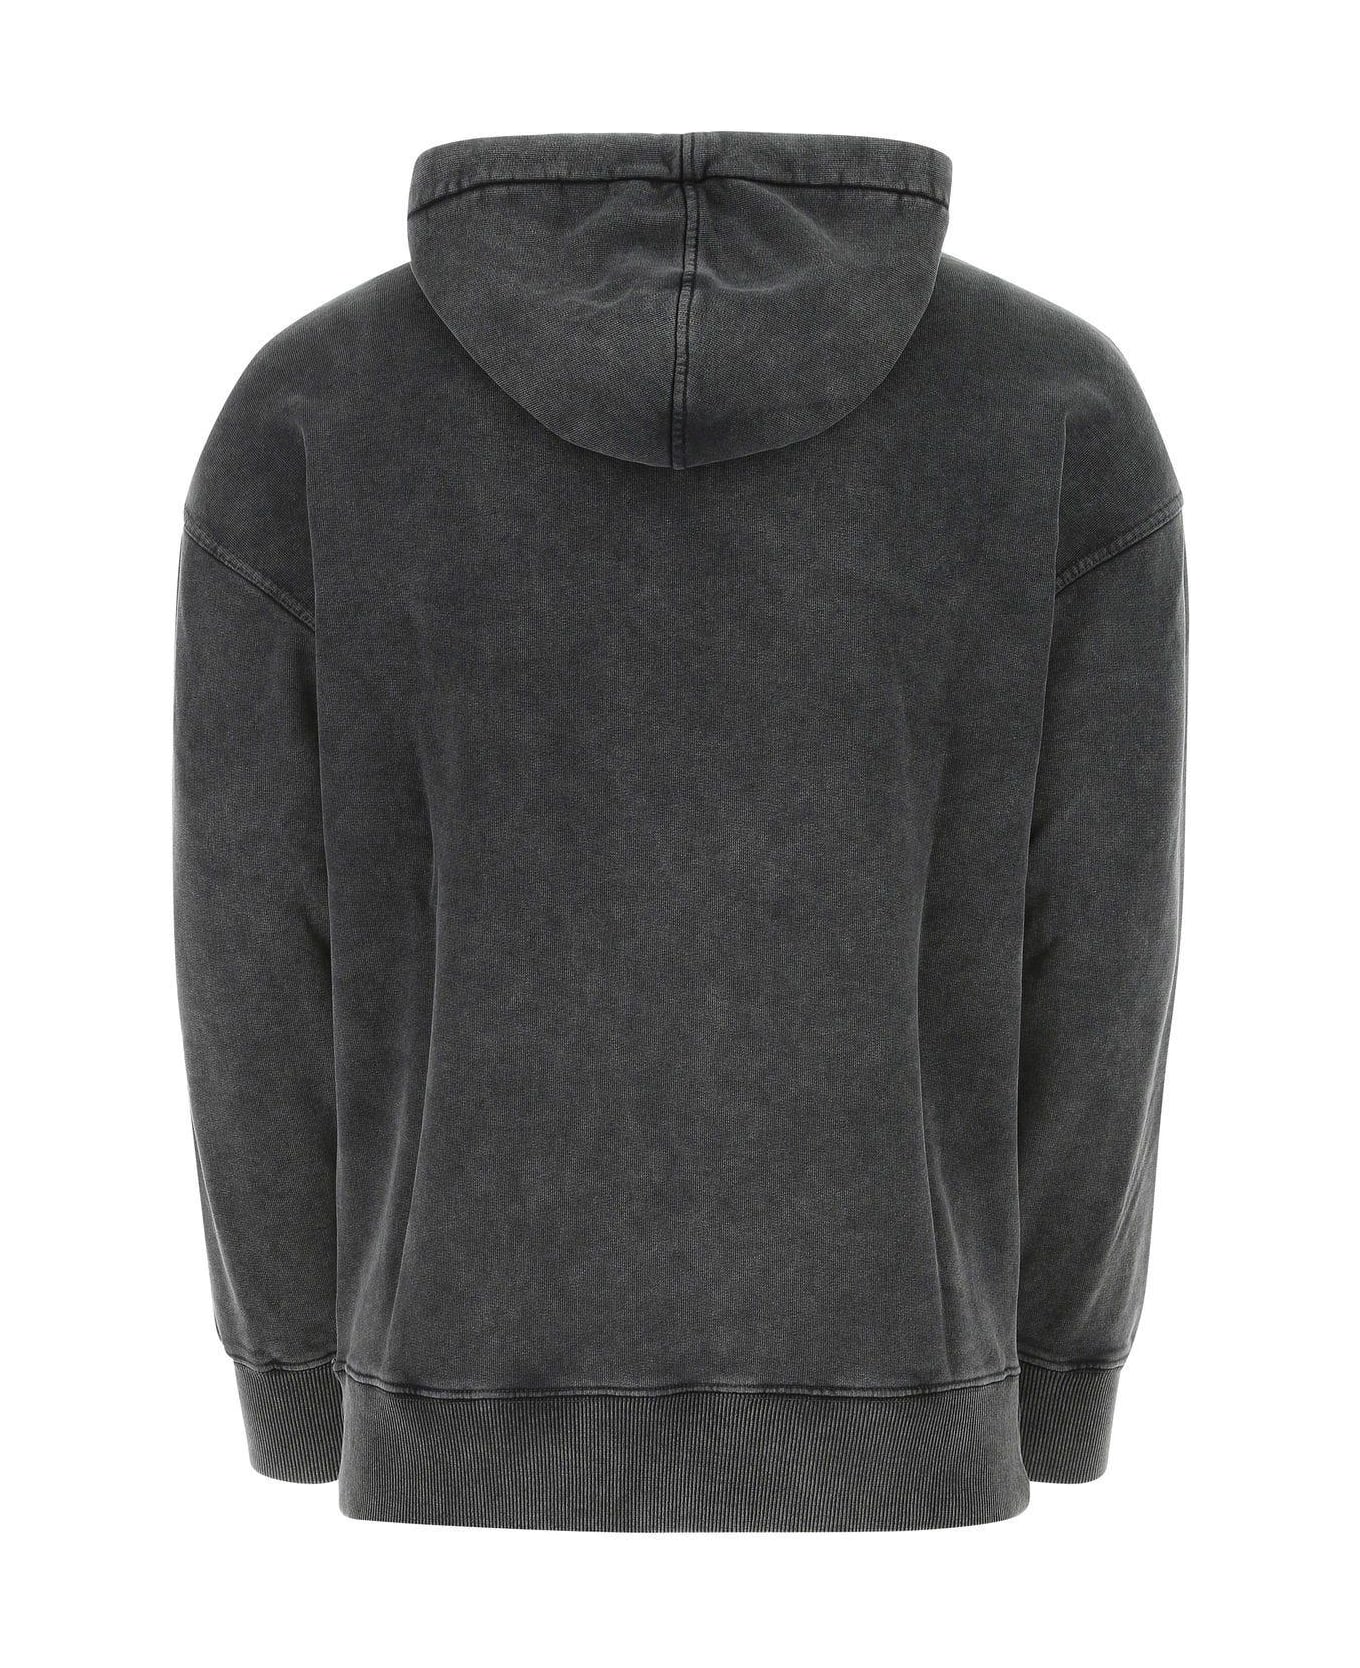 Givenchy Charcoal Cotton Sweatshirt - GREY